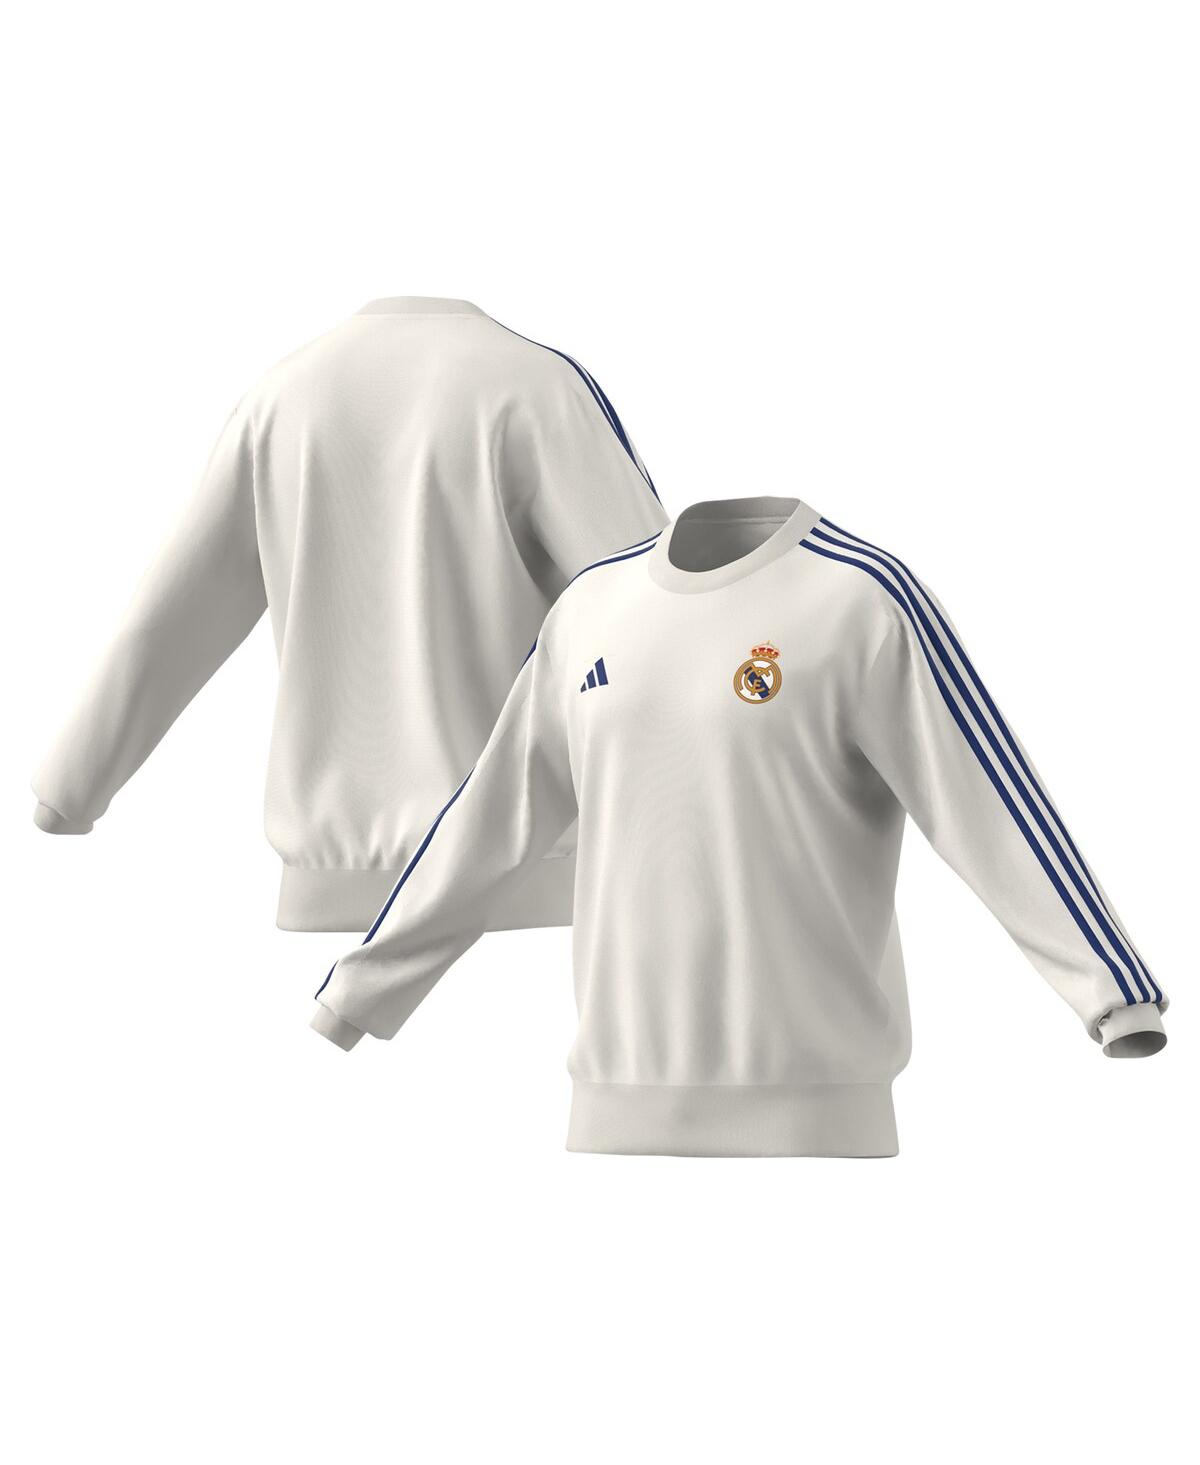 Adidas Originals Men's White Real Madrid Dna Pullover Sweatshirt